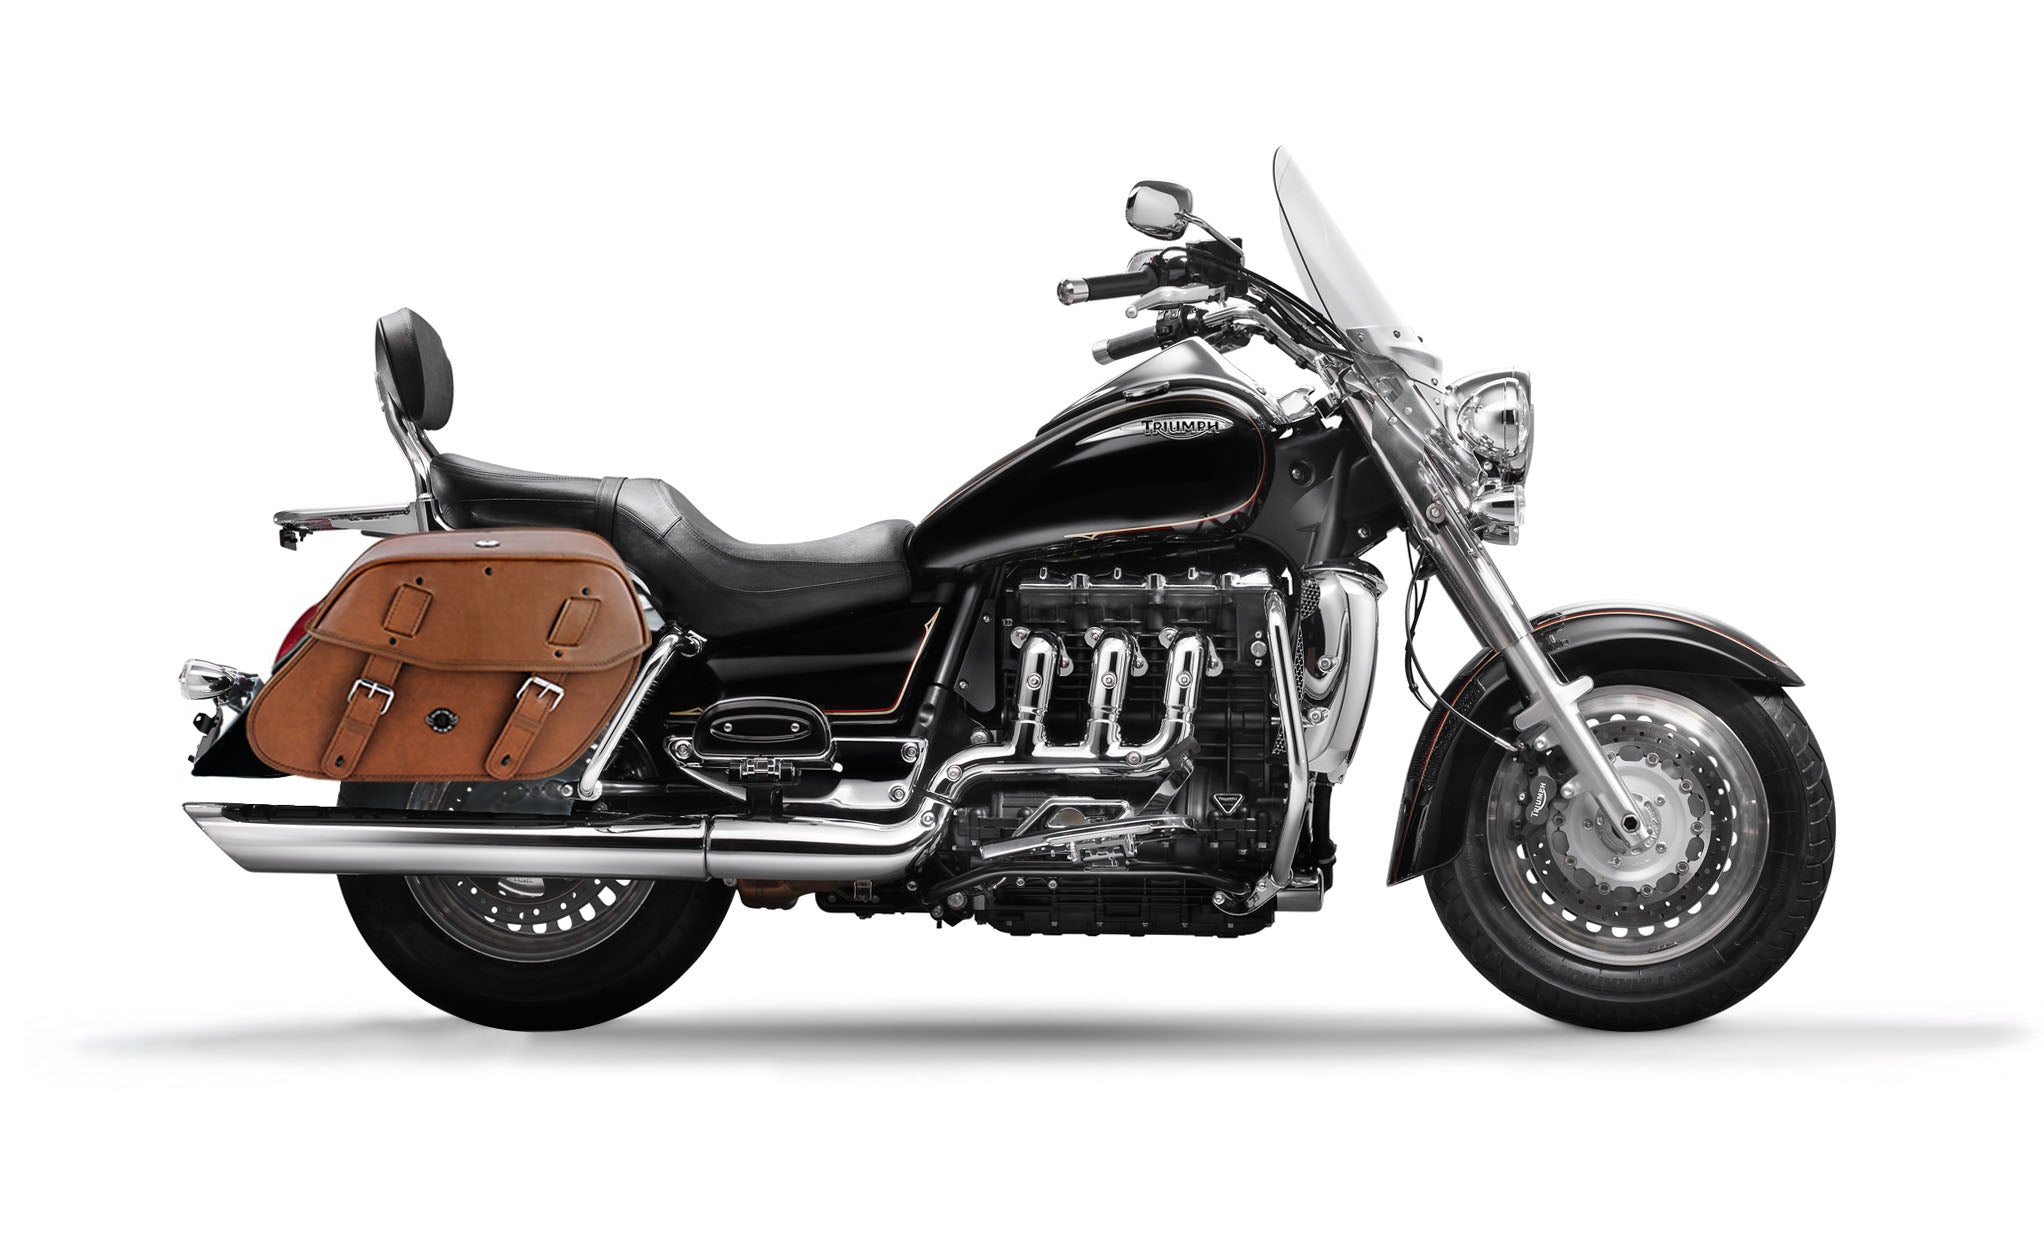 Viking Odin Brown Large Triumph Rocket Iii Touring Leather Motorcycle Saddlebags on Bike Photo @expand